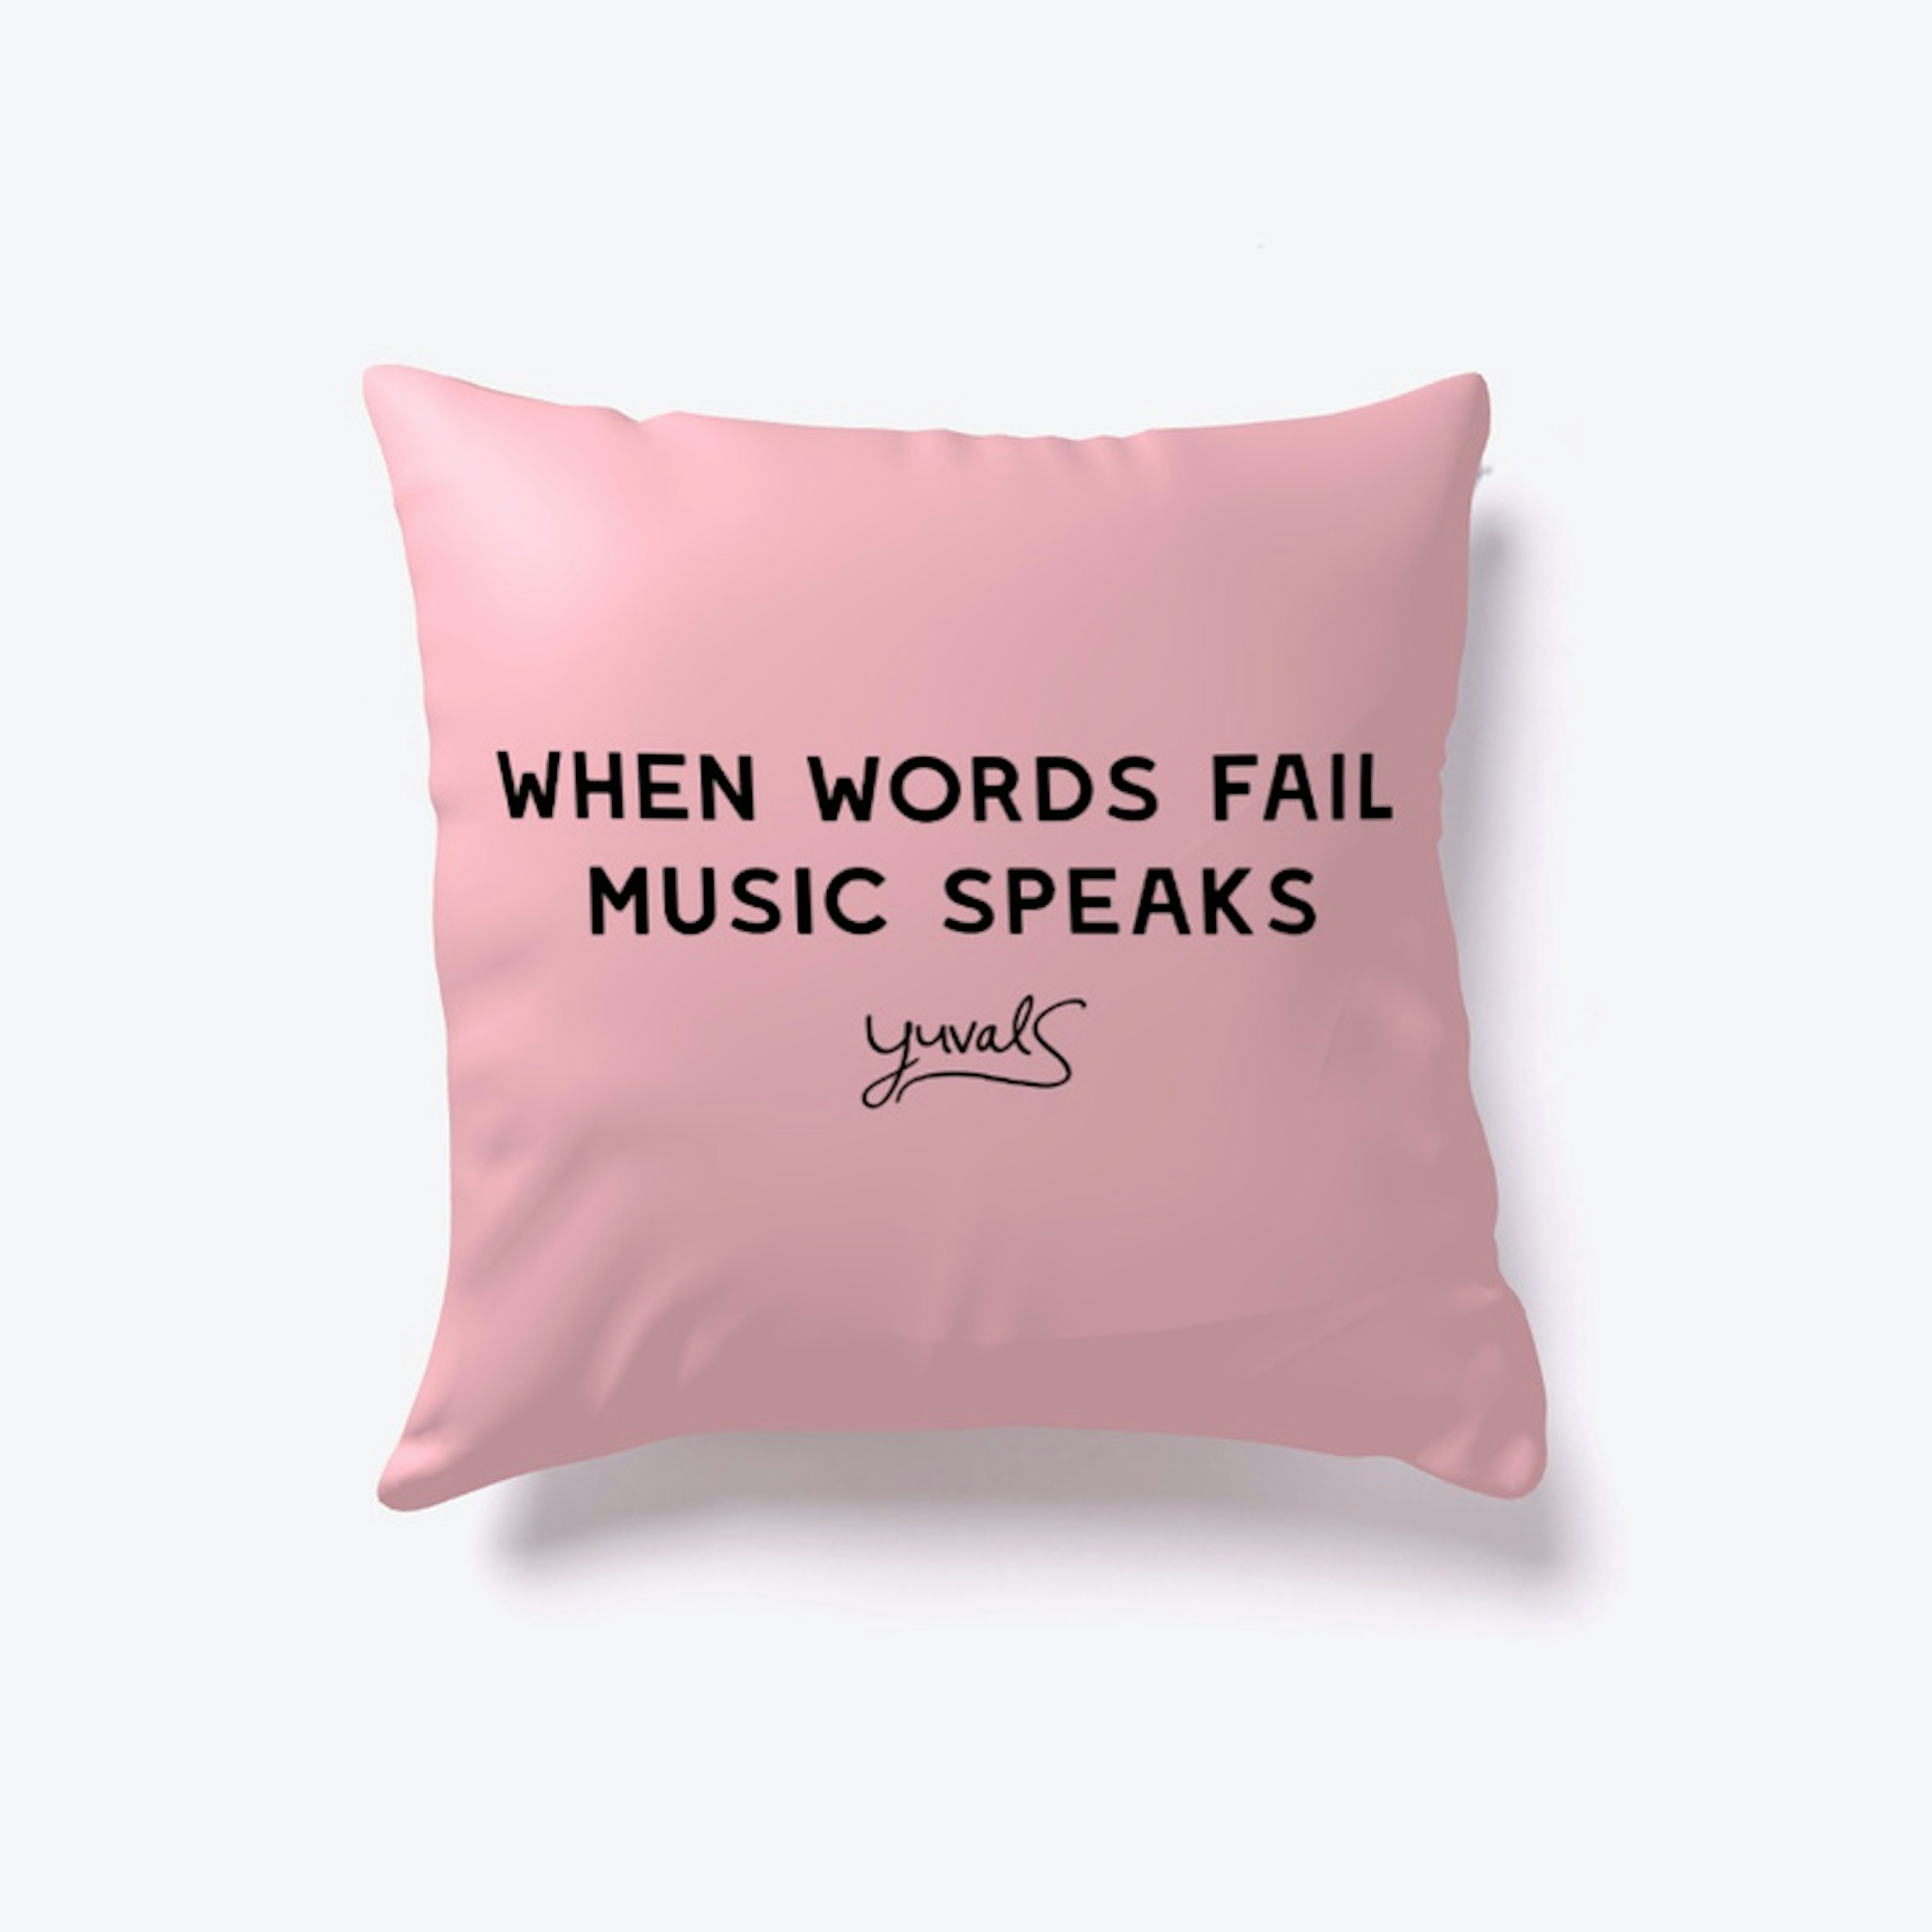 WHEN WORDS FAIL MUSIC SPEAKS